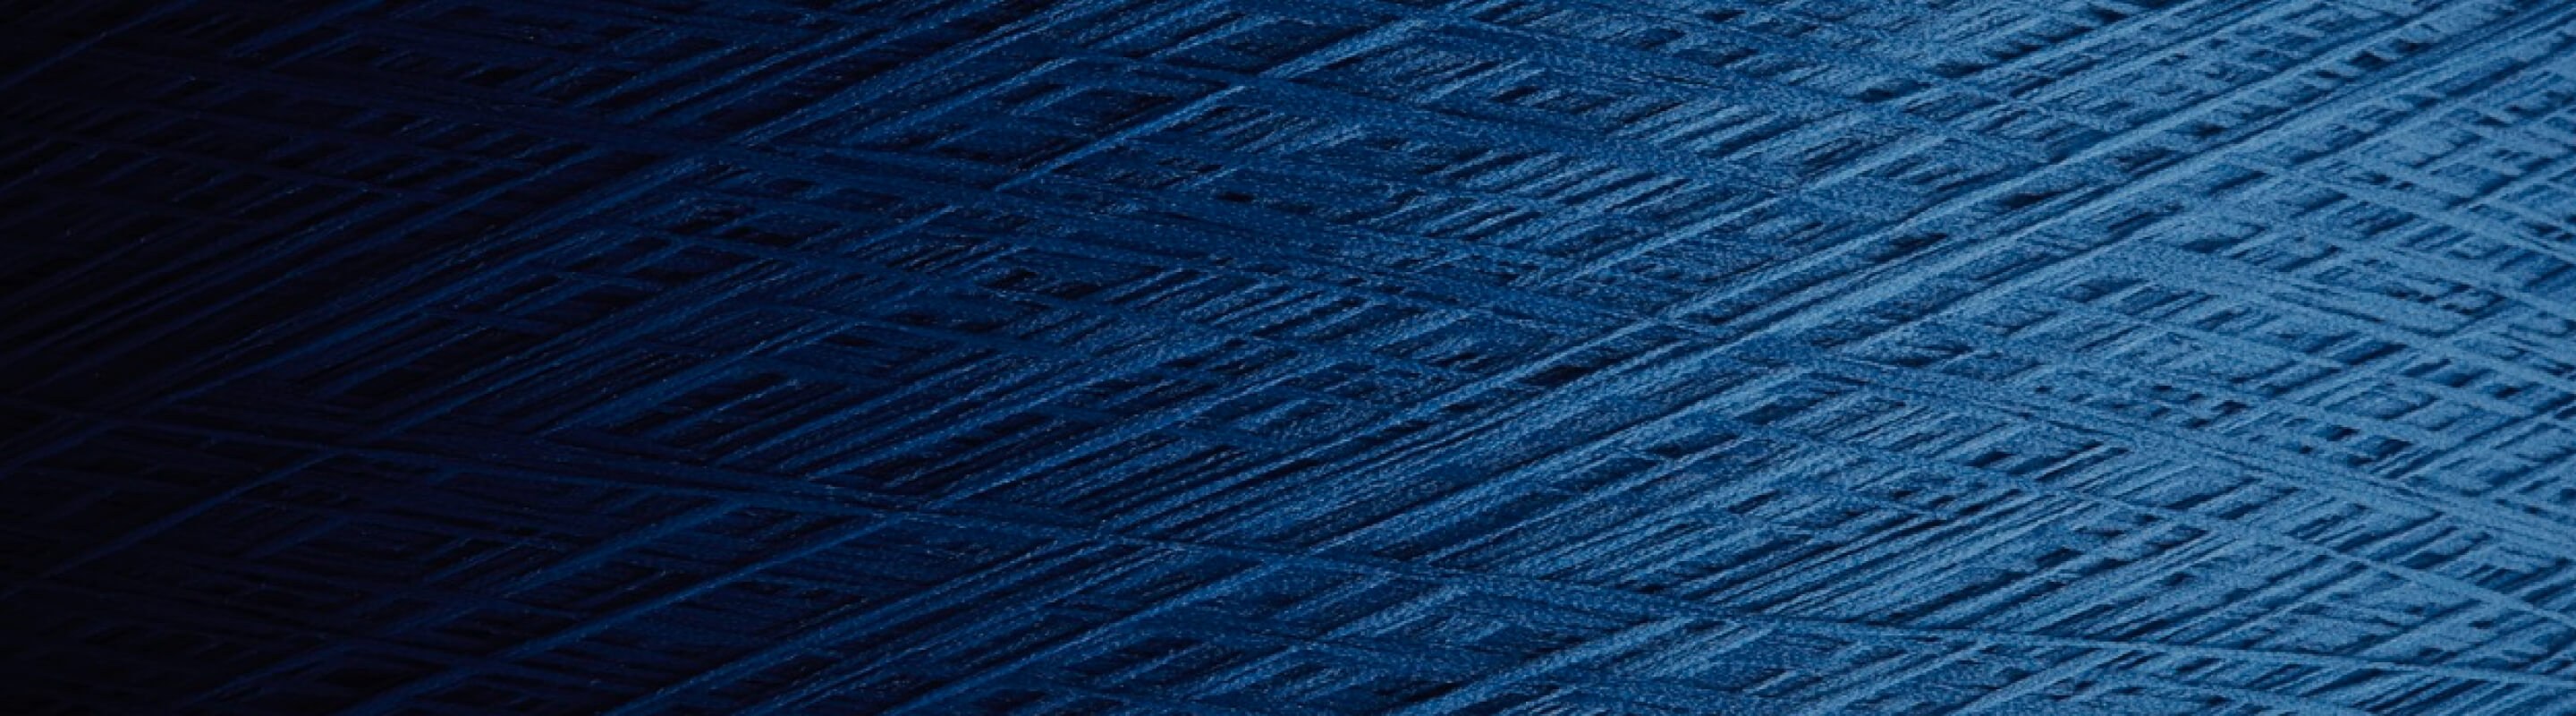 Blue yarn up close 1440 400 2x